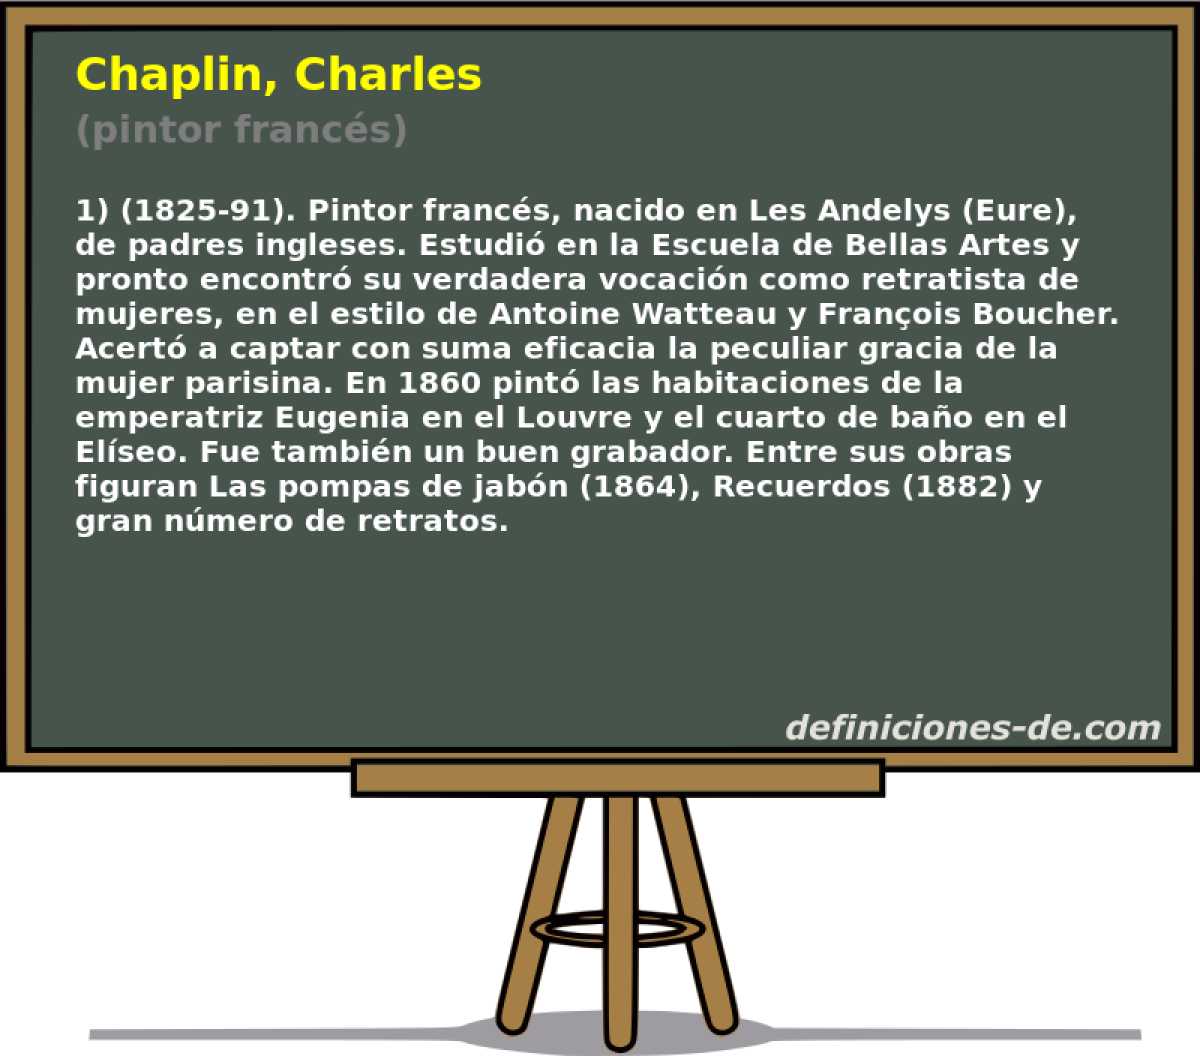 Chaplin, Charles (pintor francs)